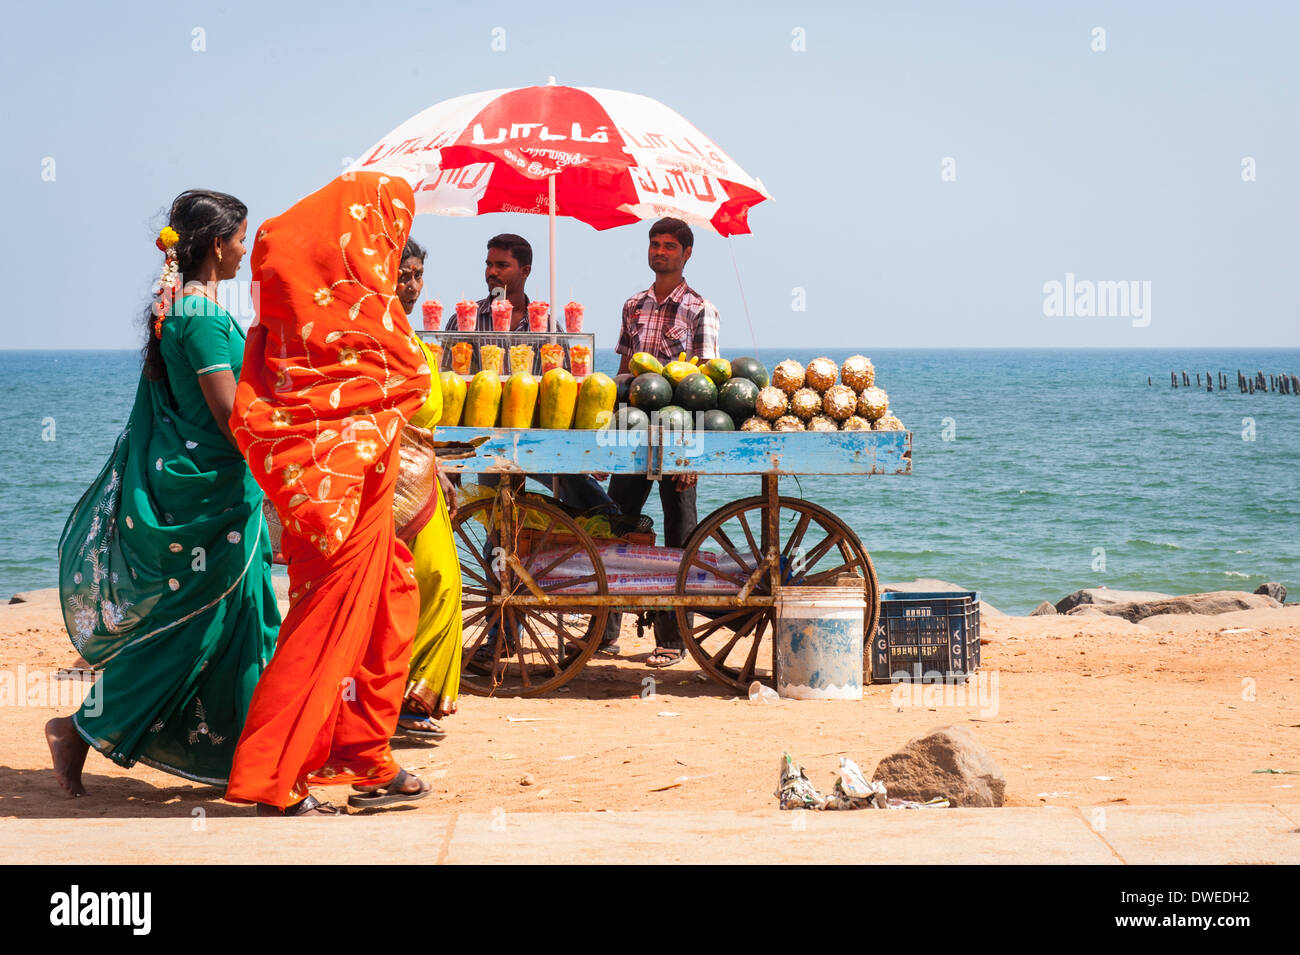 India Tamil Nadu Pondicherry Puducherry beach sand scene pretty young ladies women girls females vendor cart parasol umbrella fresh fruit papaya melon Stock Photo